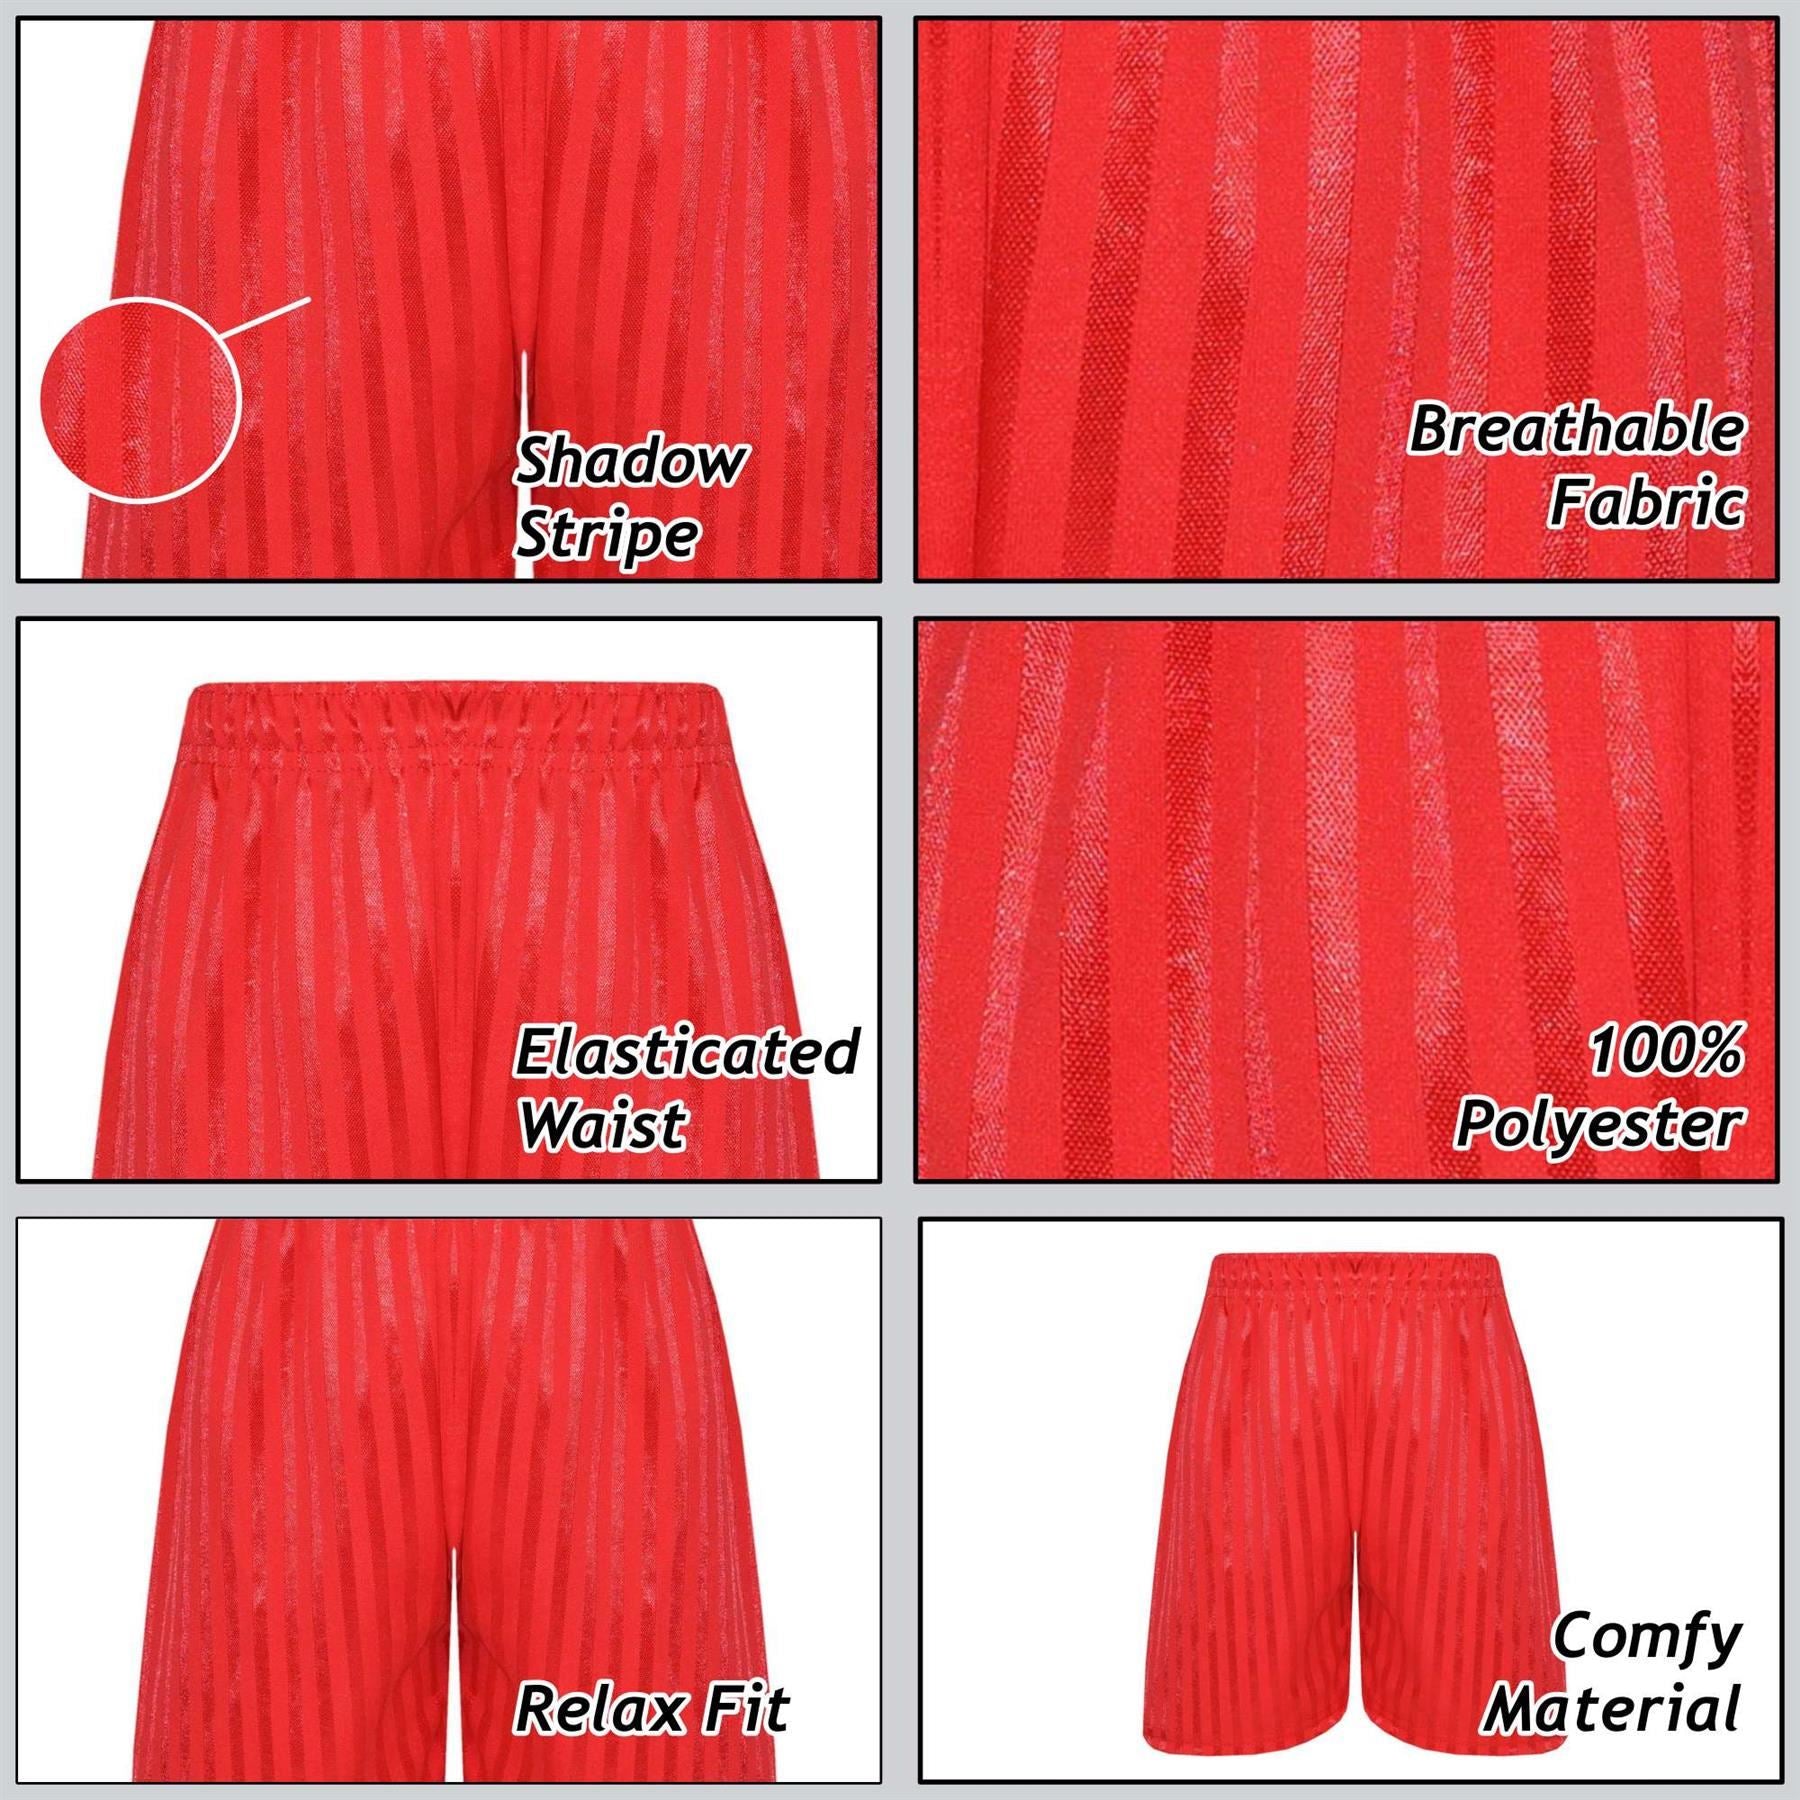 Kids Girls Boys Shadow Stripe PE Shorts Sports Pack Of 2 Gym School Shorts 2-13